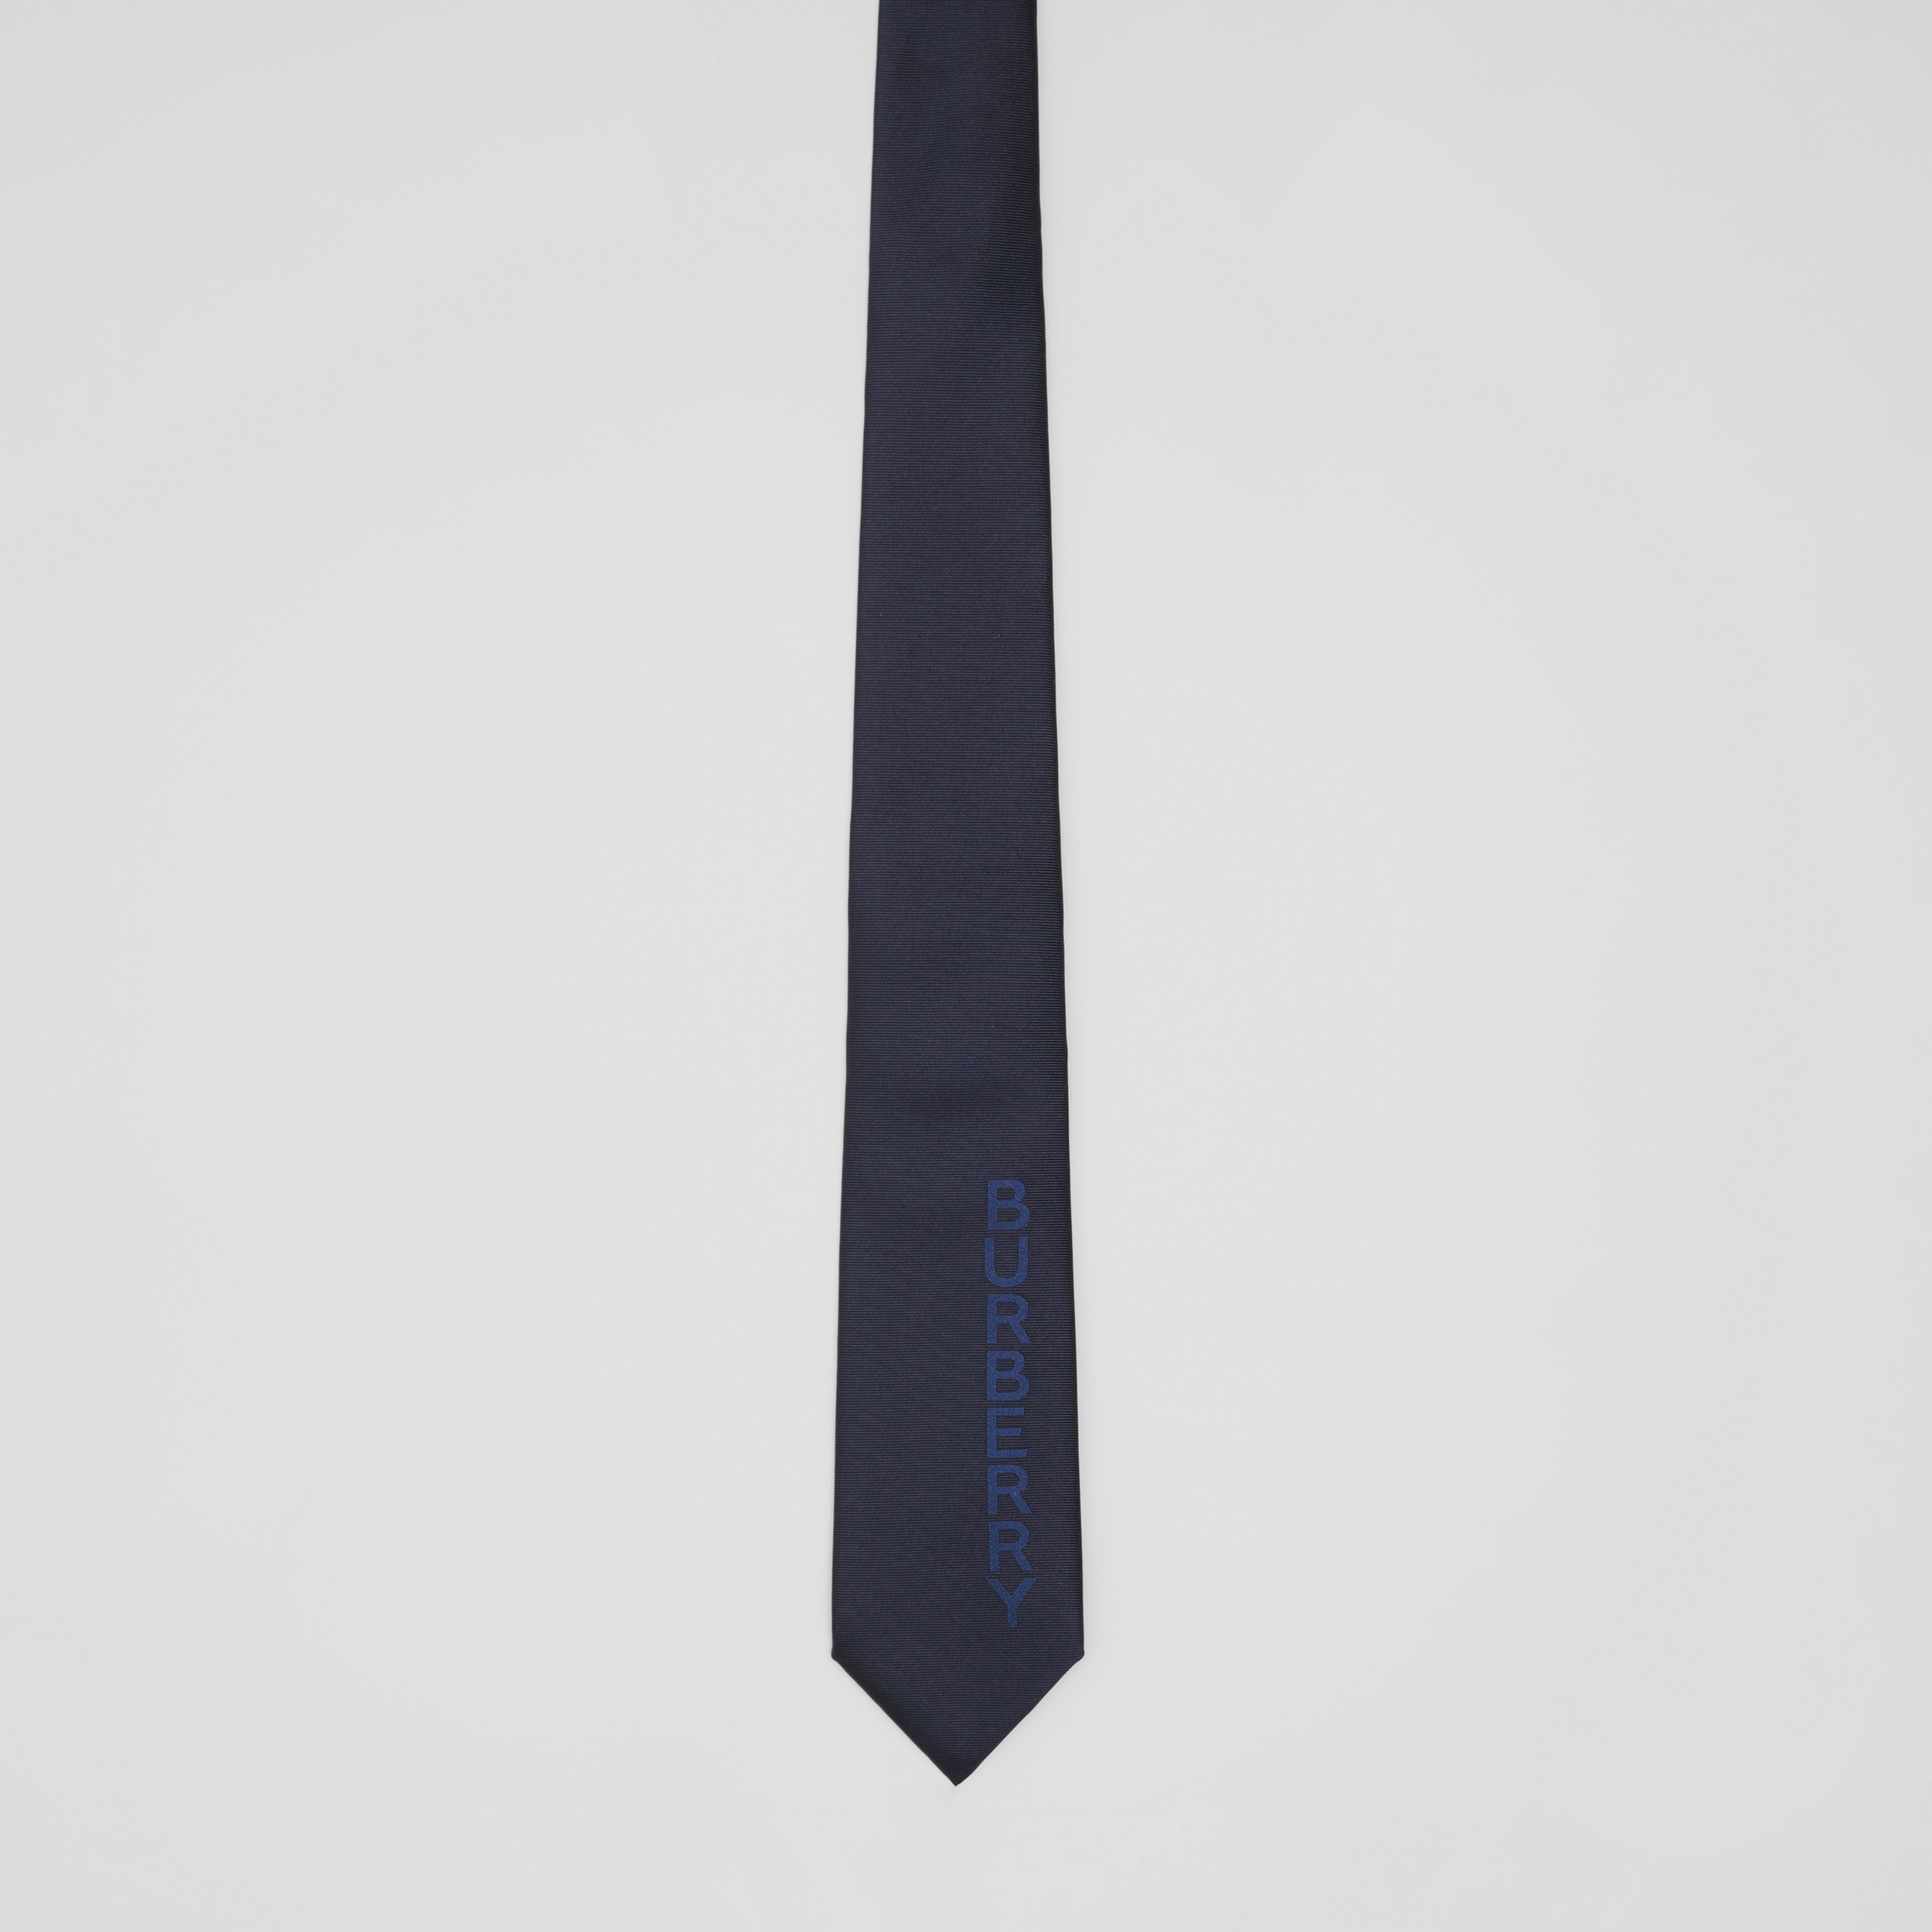 Klassisch geschnittene Seidenkrawatte mit Burberry-Schriftzug (Marineblau) - Herren | Burberry® - 4